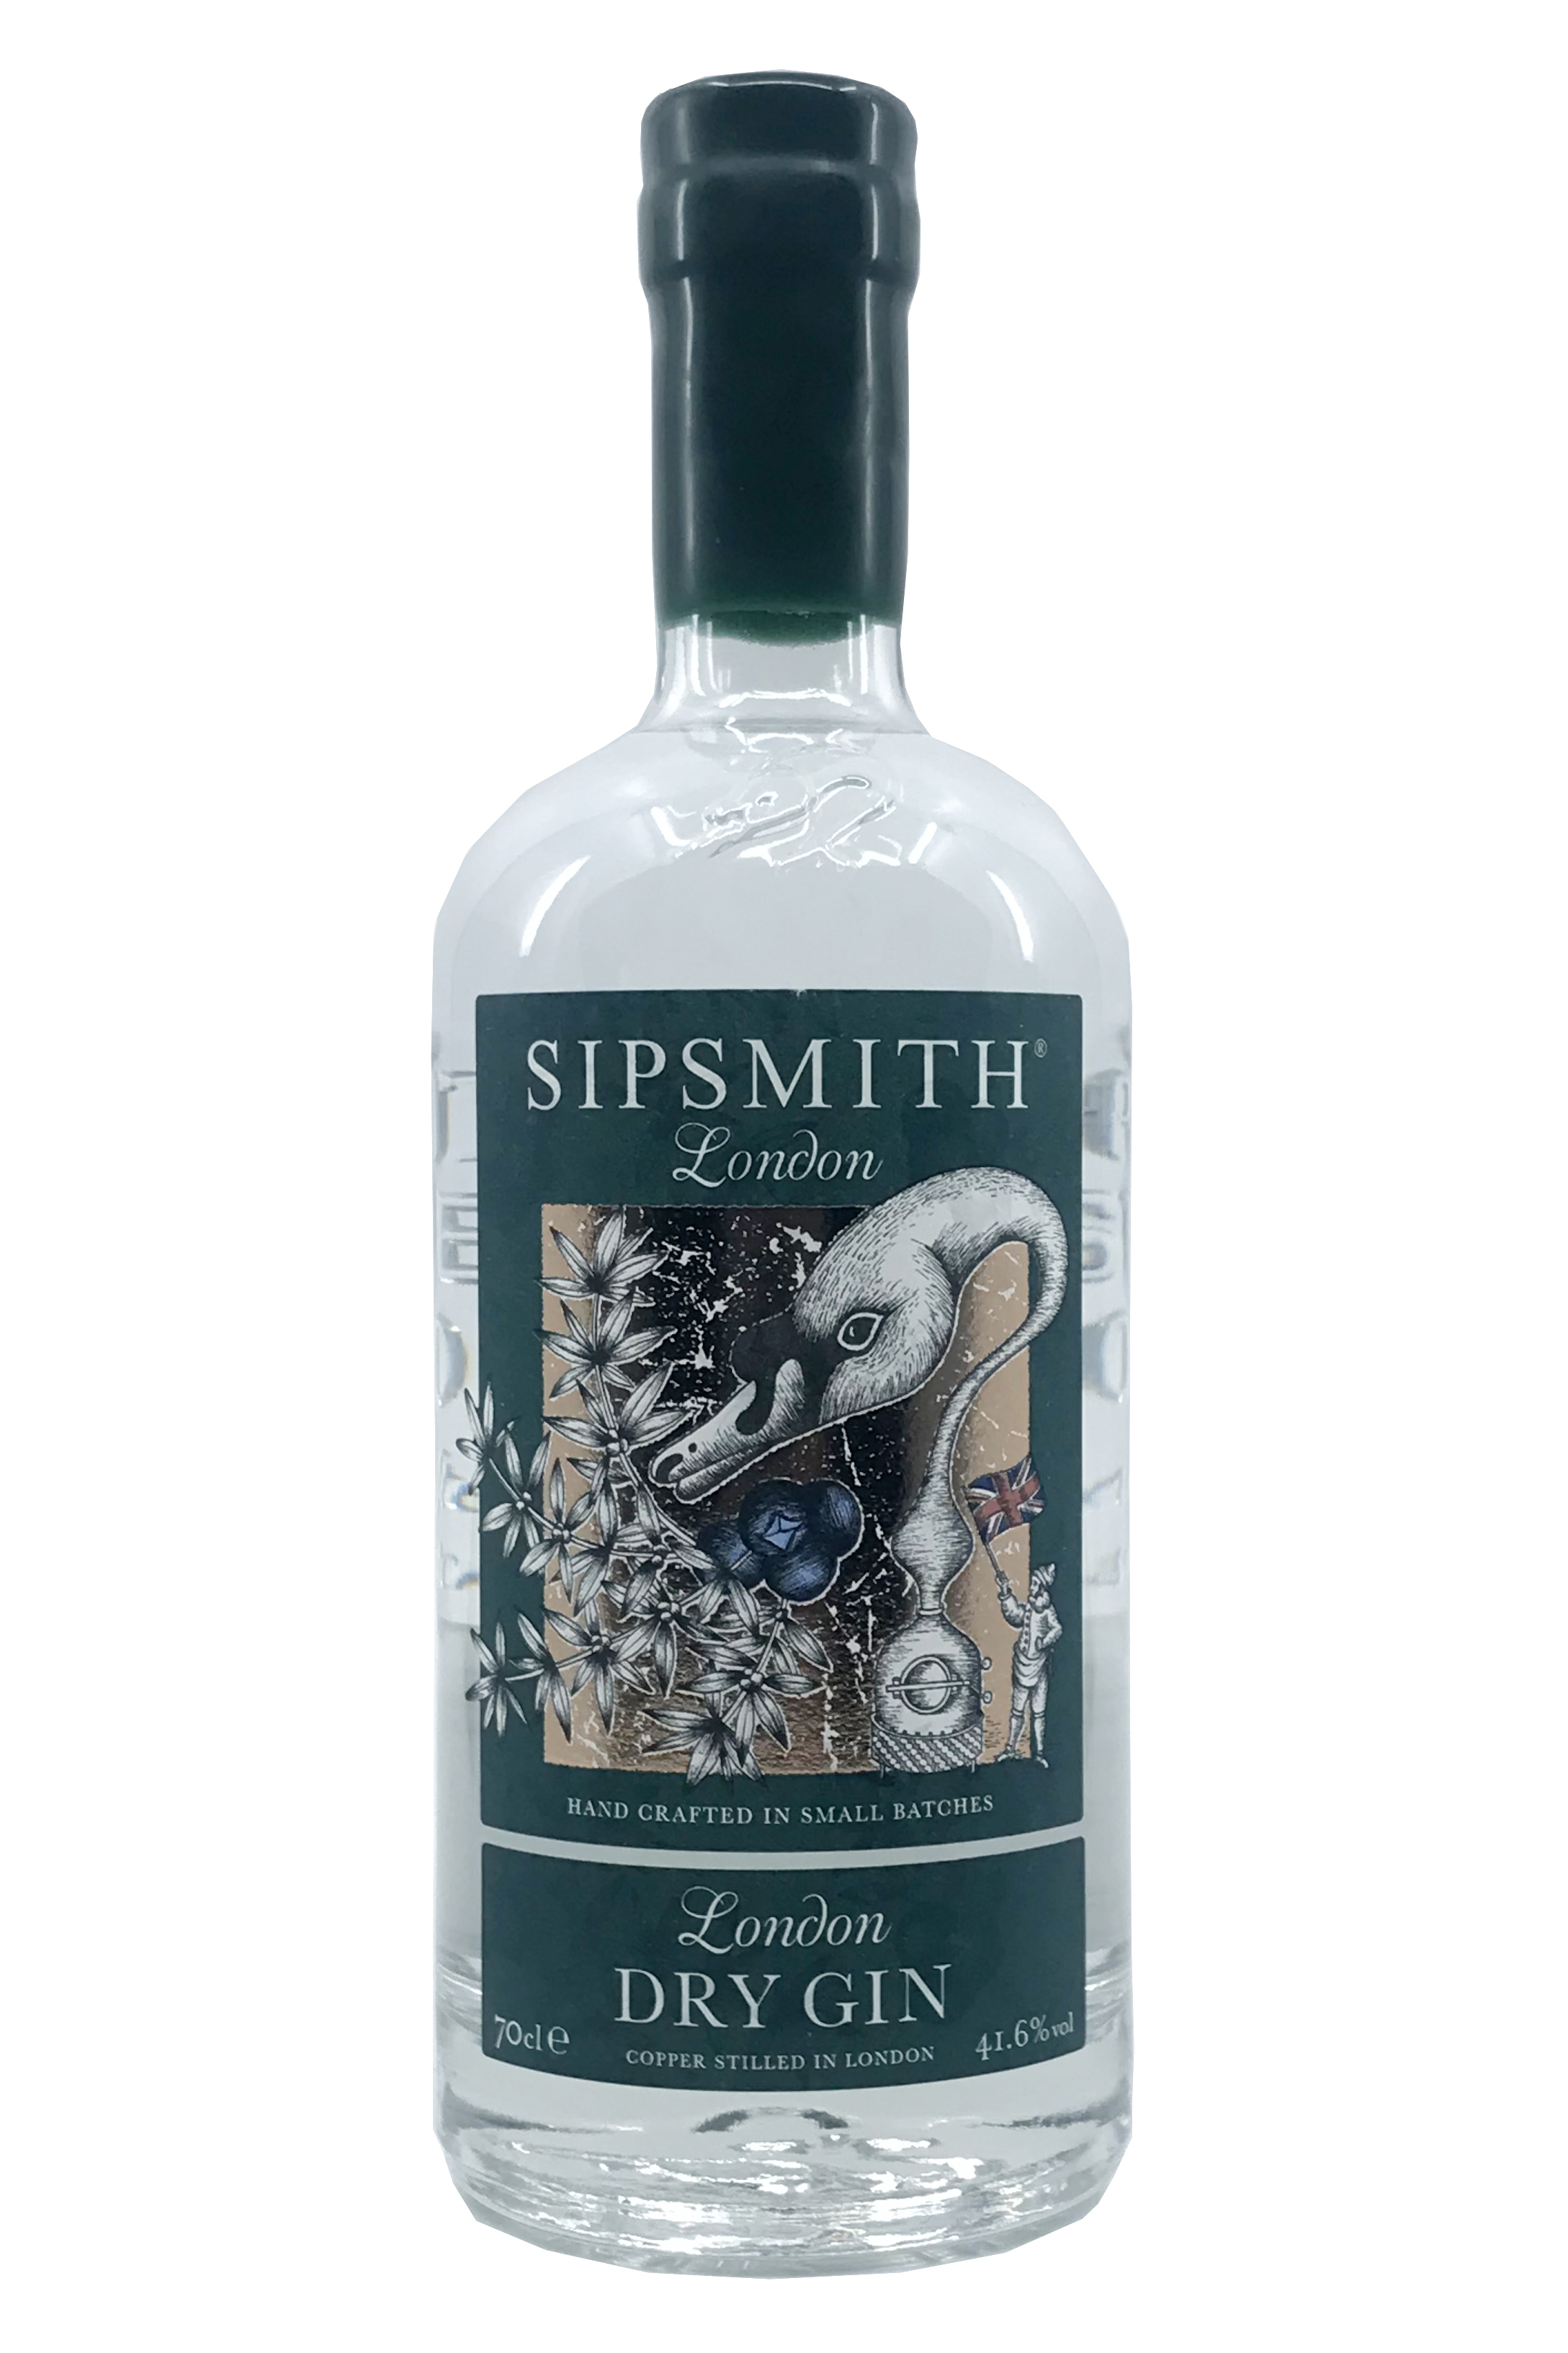 Sipsmith - London Dry Gin - 0,7l 41,6% vol. Alk.